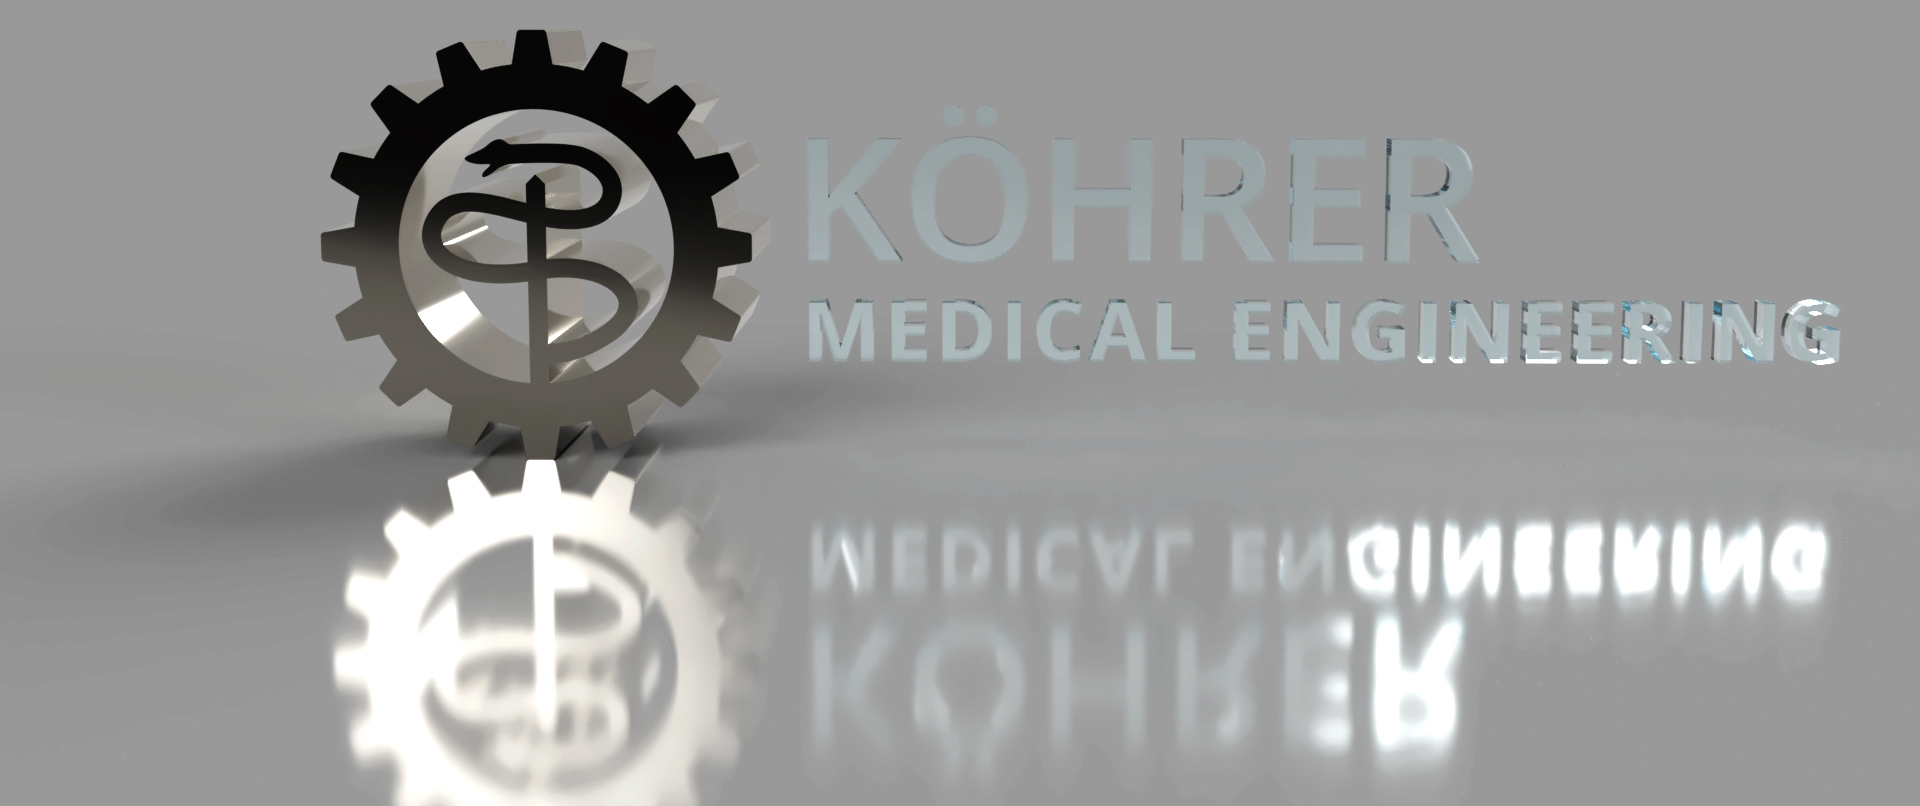 Köhrer Medical Engineering